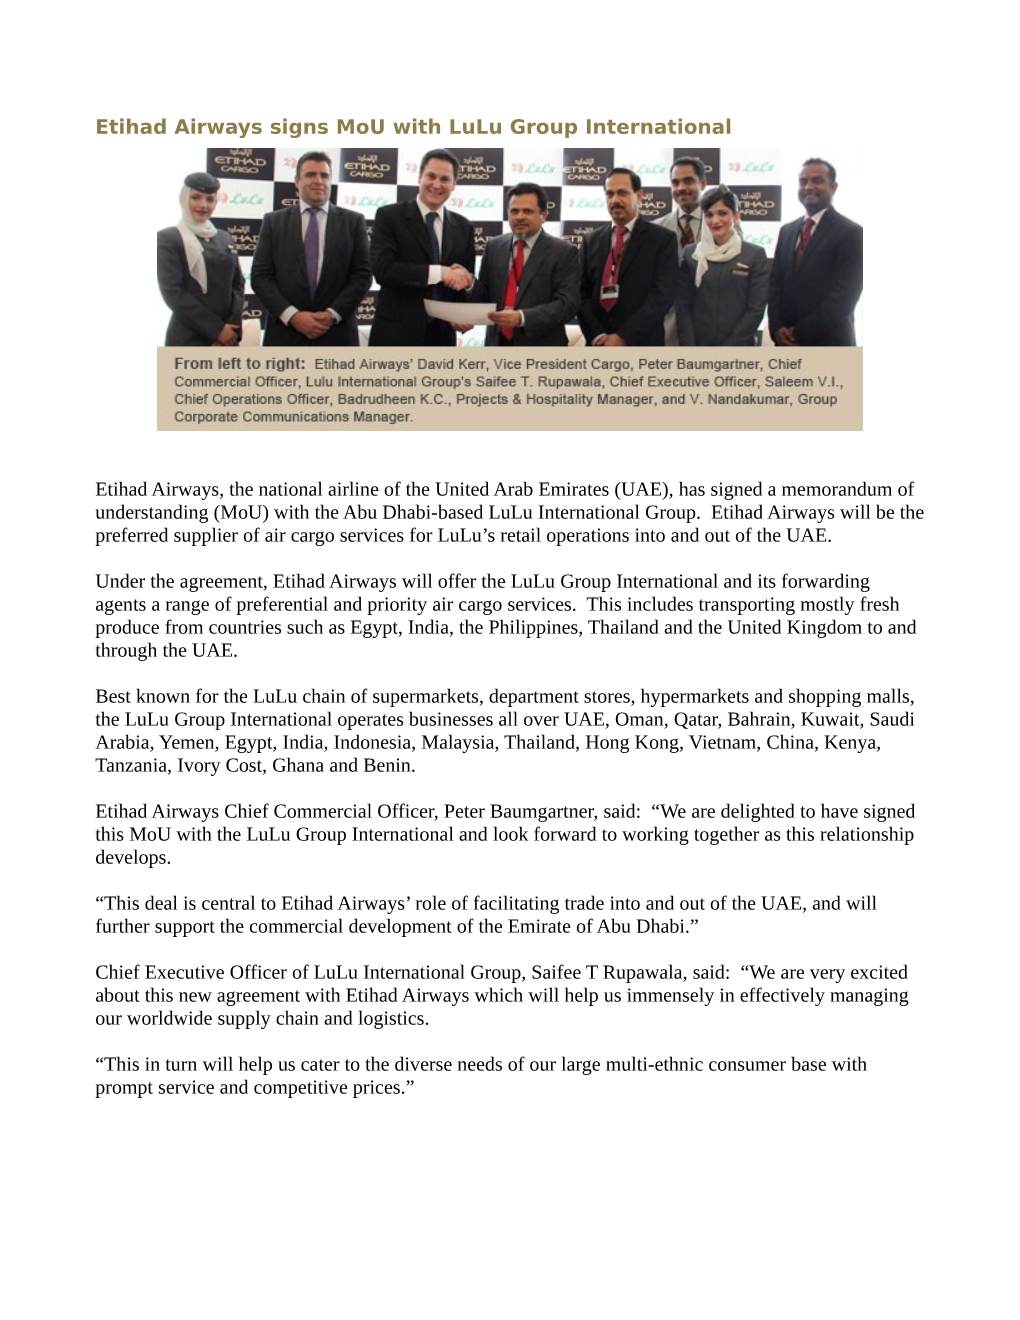 UAE), Has Signed a Memorandum of Understanding (Mou) with the Abu Dhabi-Based Lulu International Group